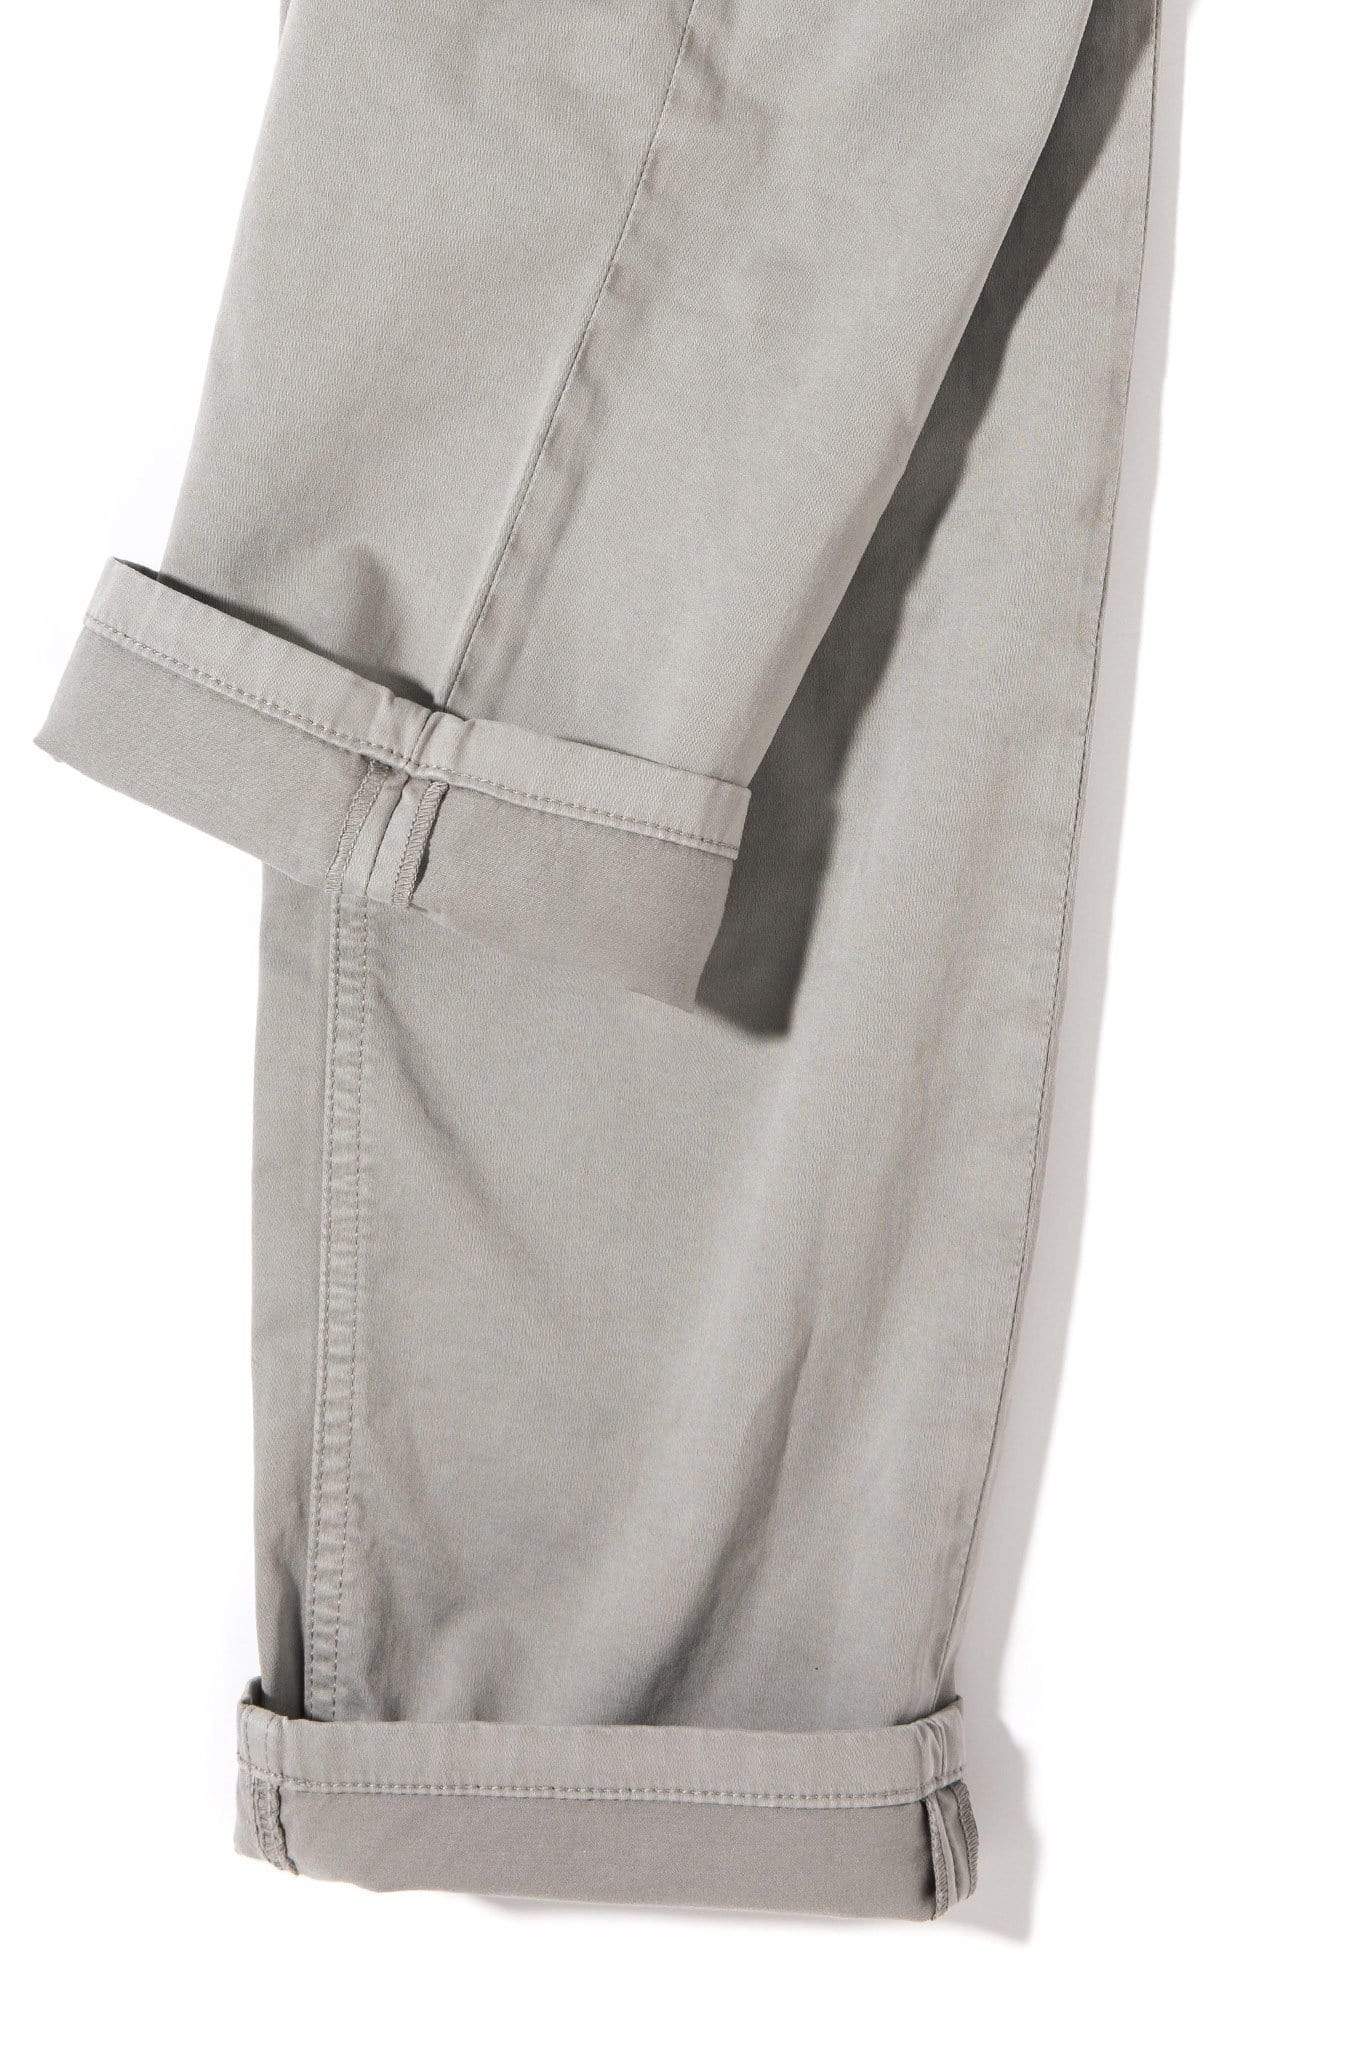 Yuma Soft Touch In Cenere | Mens - Pants - 5 Pocket | Teleria Zed